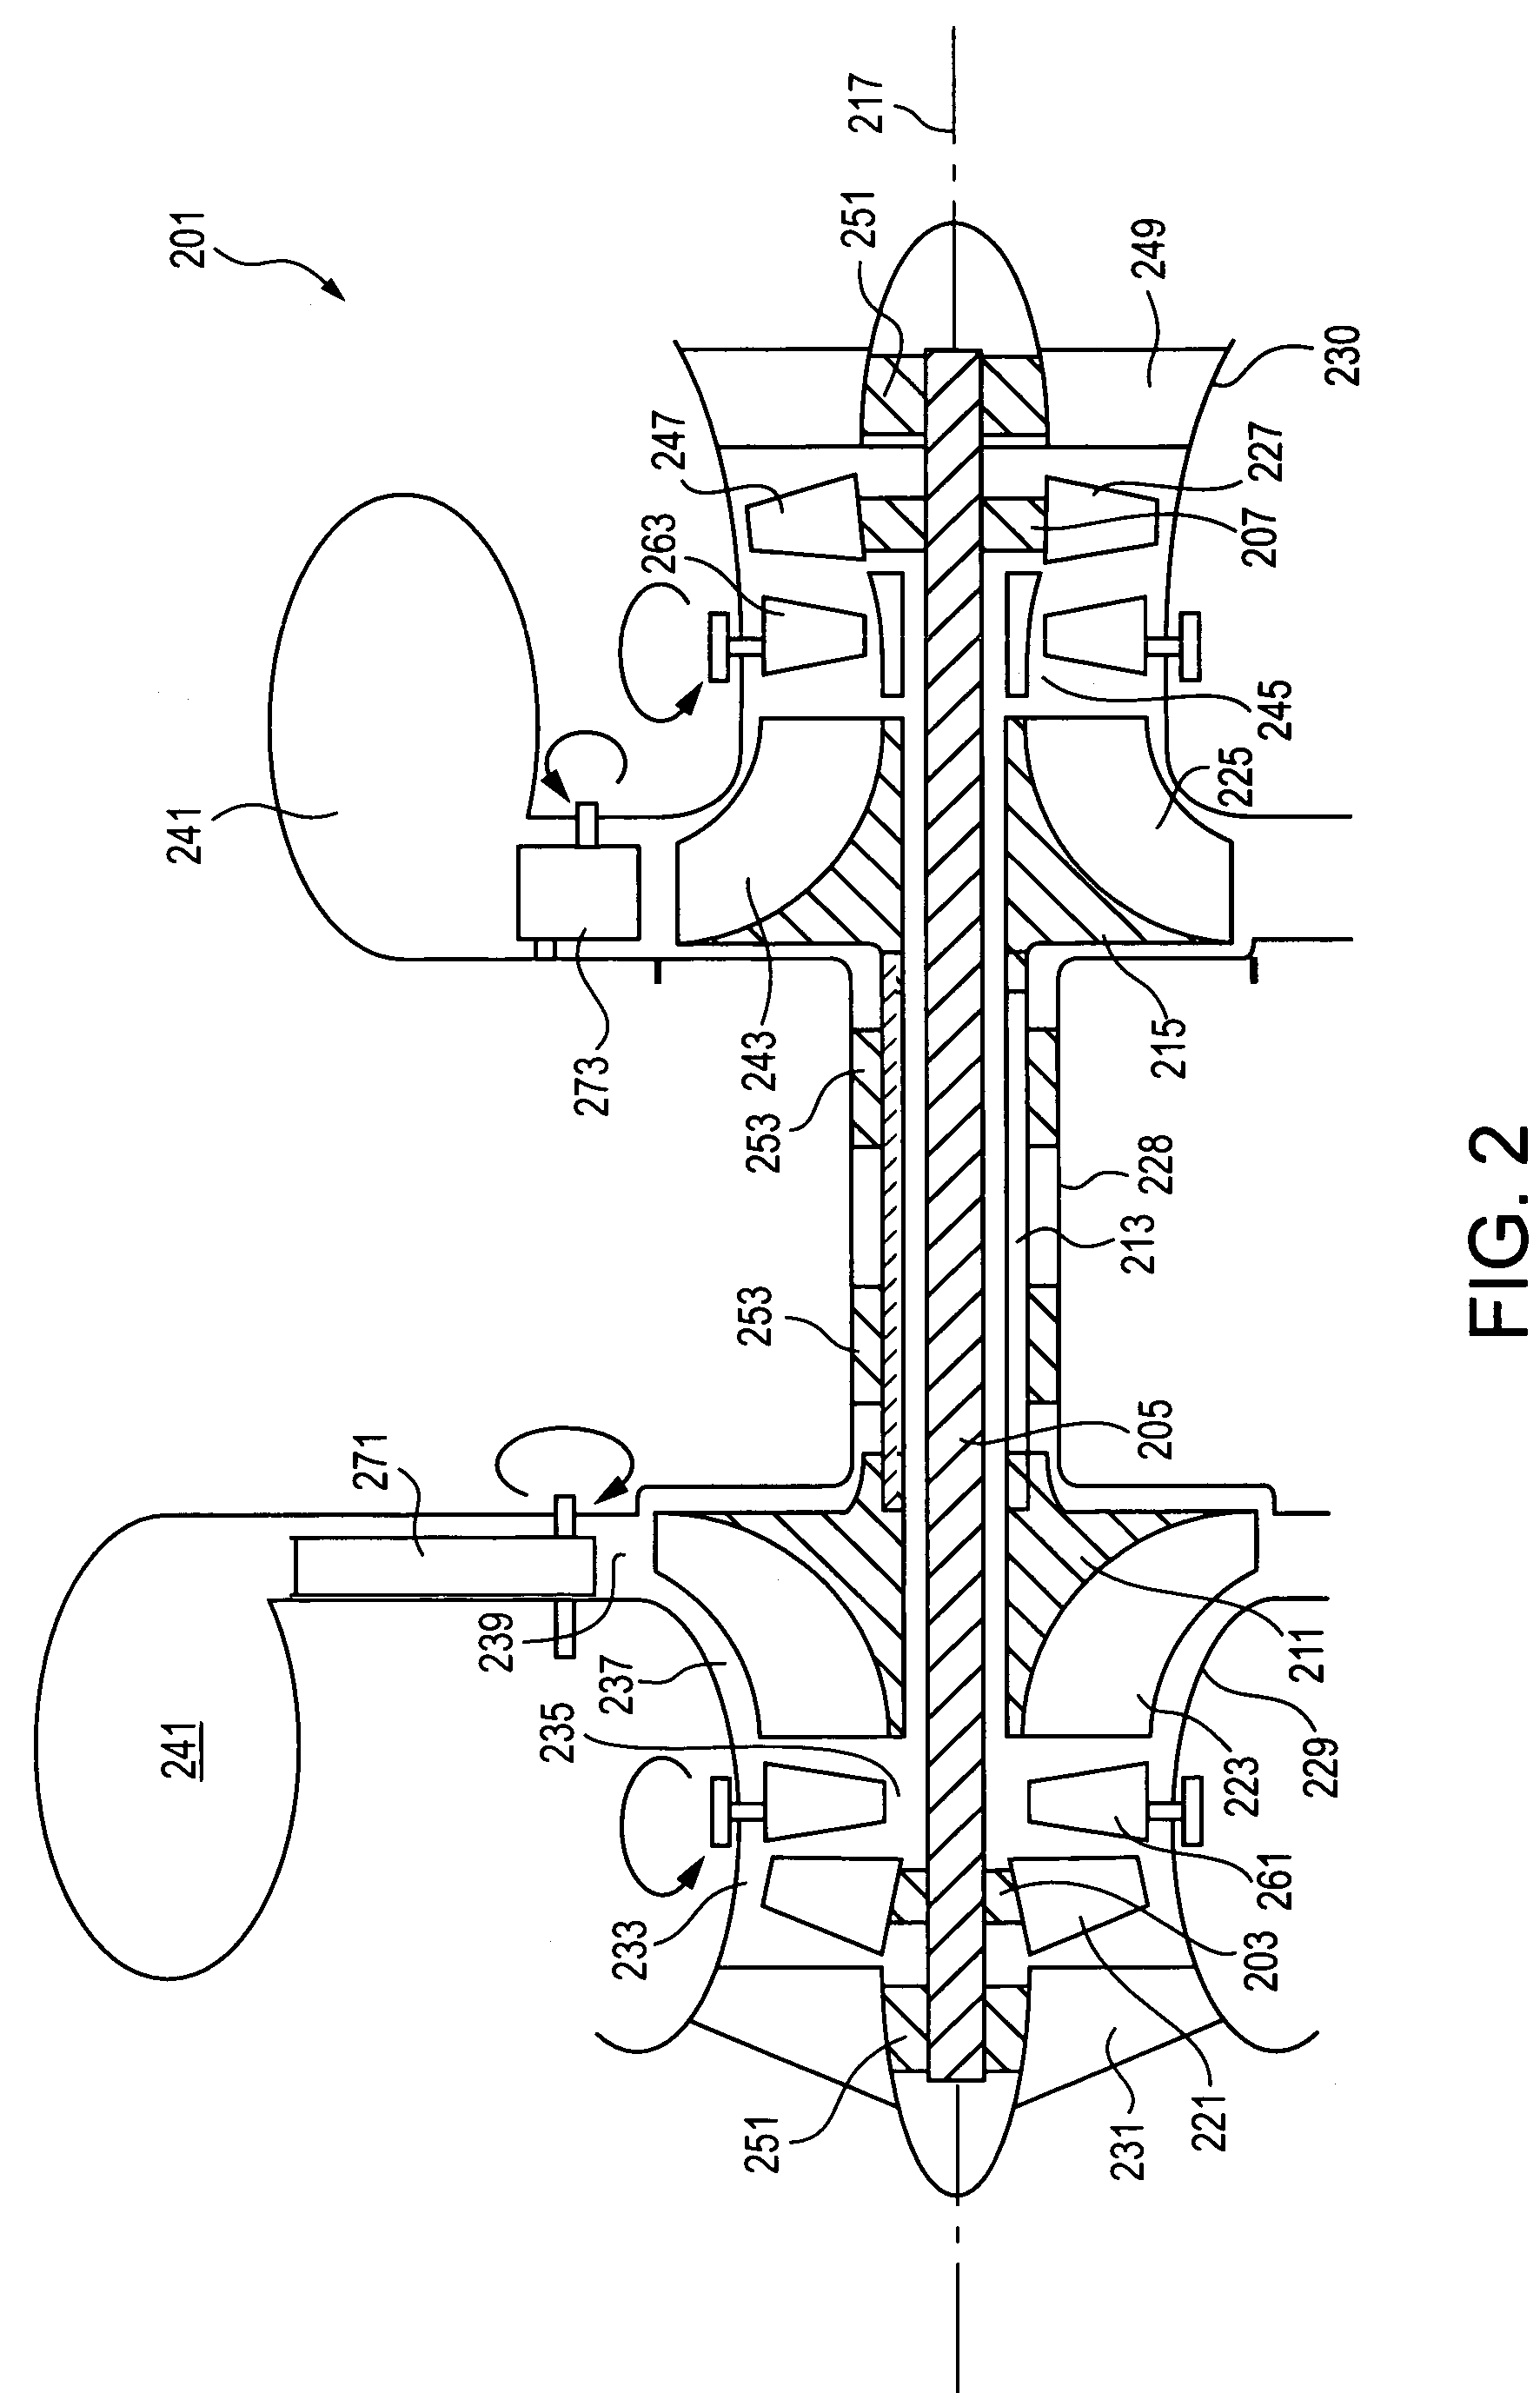 Two-shaft turbocharger